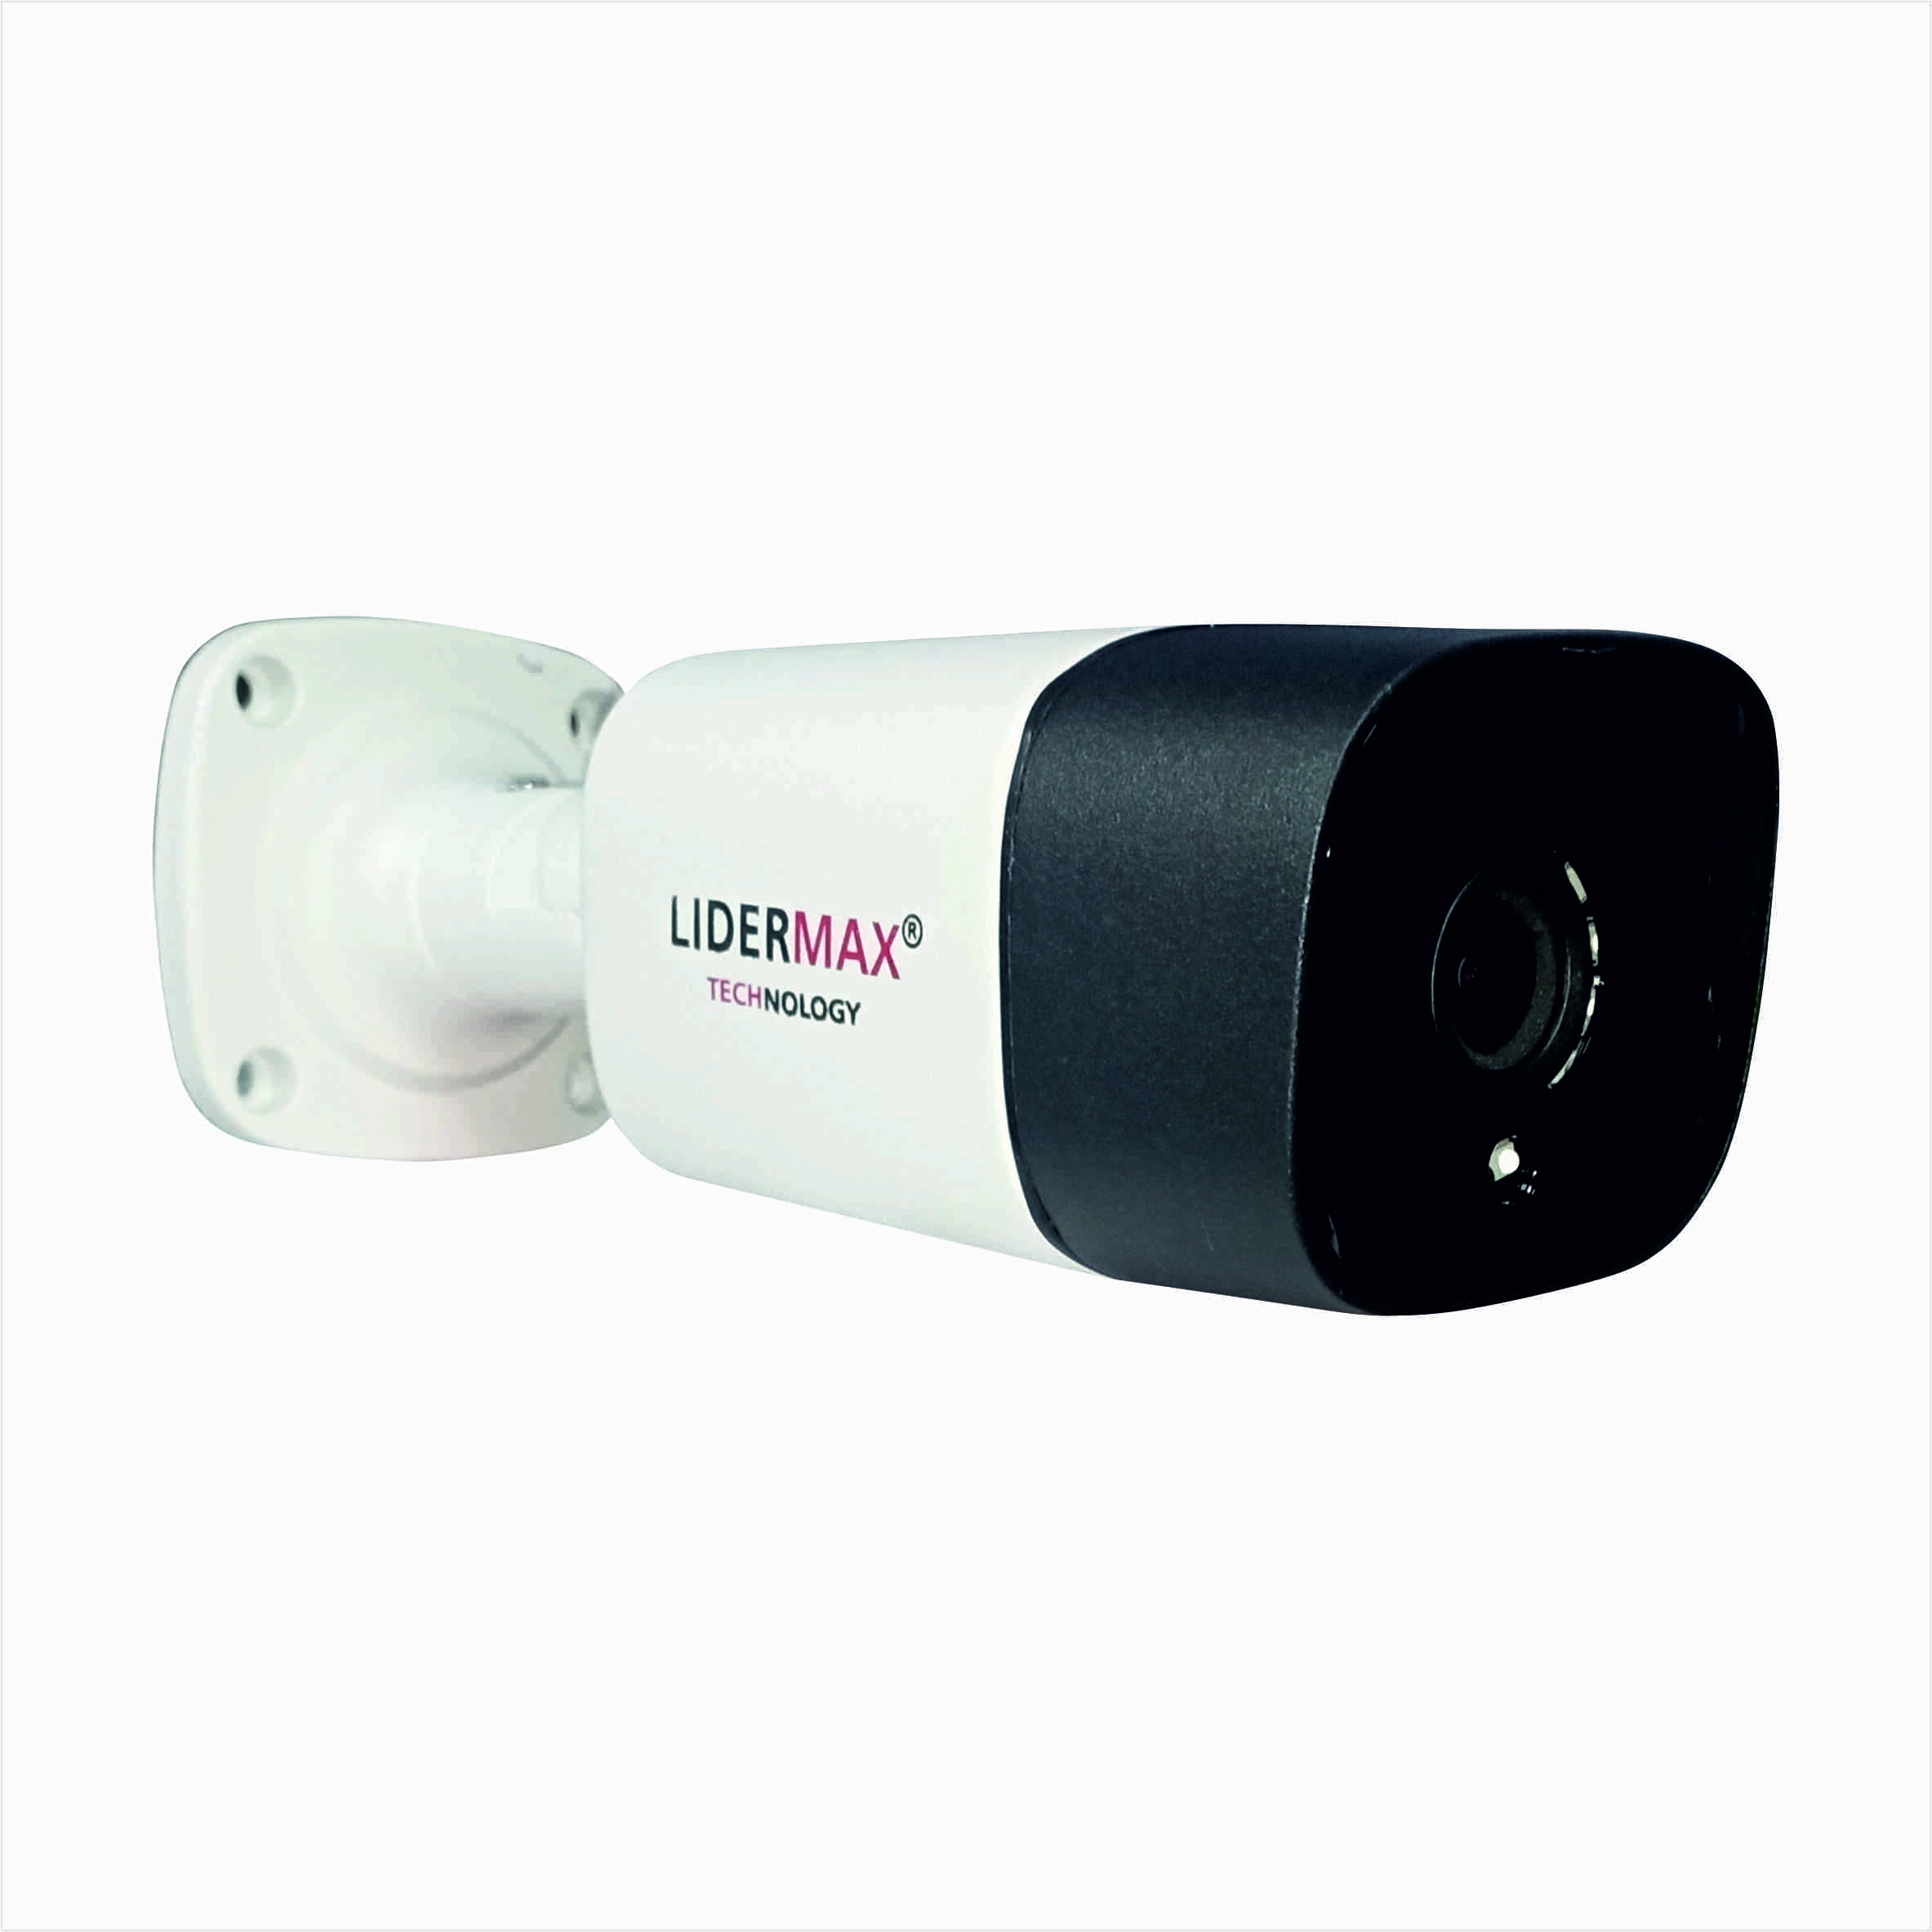 8 Мп IP-камера "LIDERMAX", IP-828ST, PoE, mic, 2.8mm, StarLight, цилиндрическая